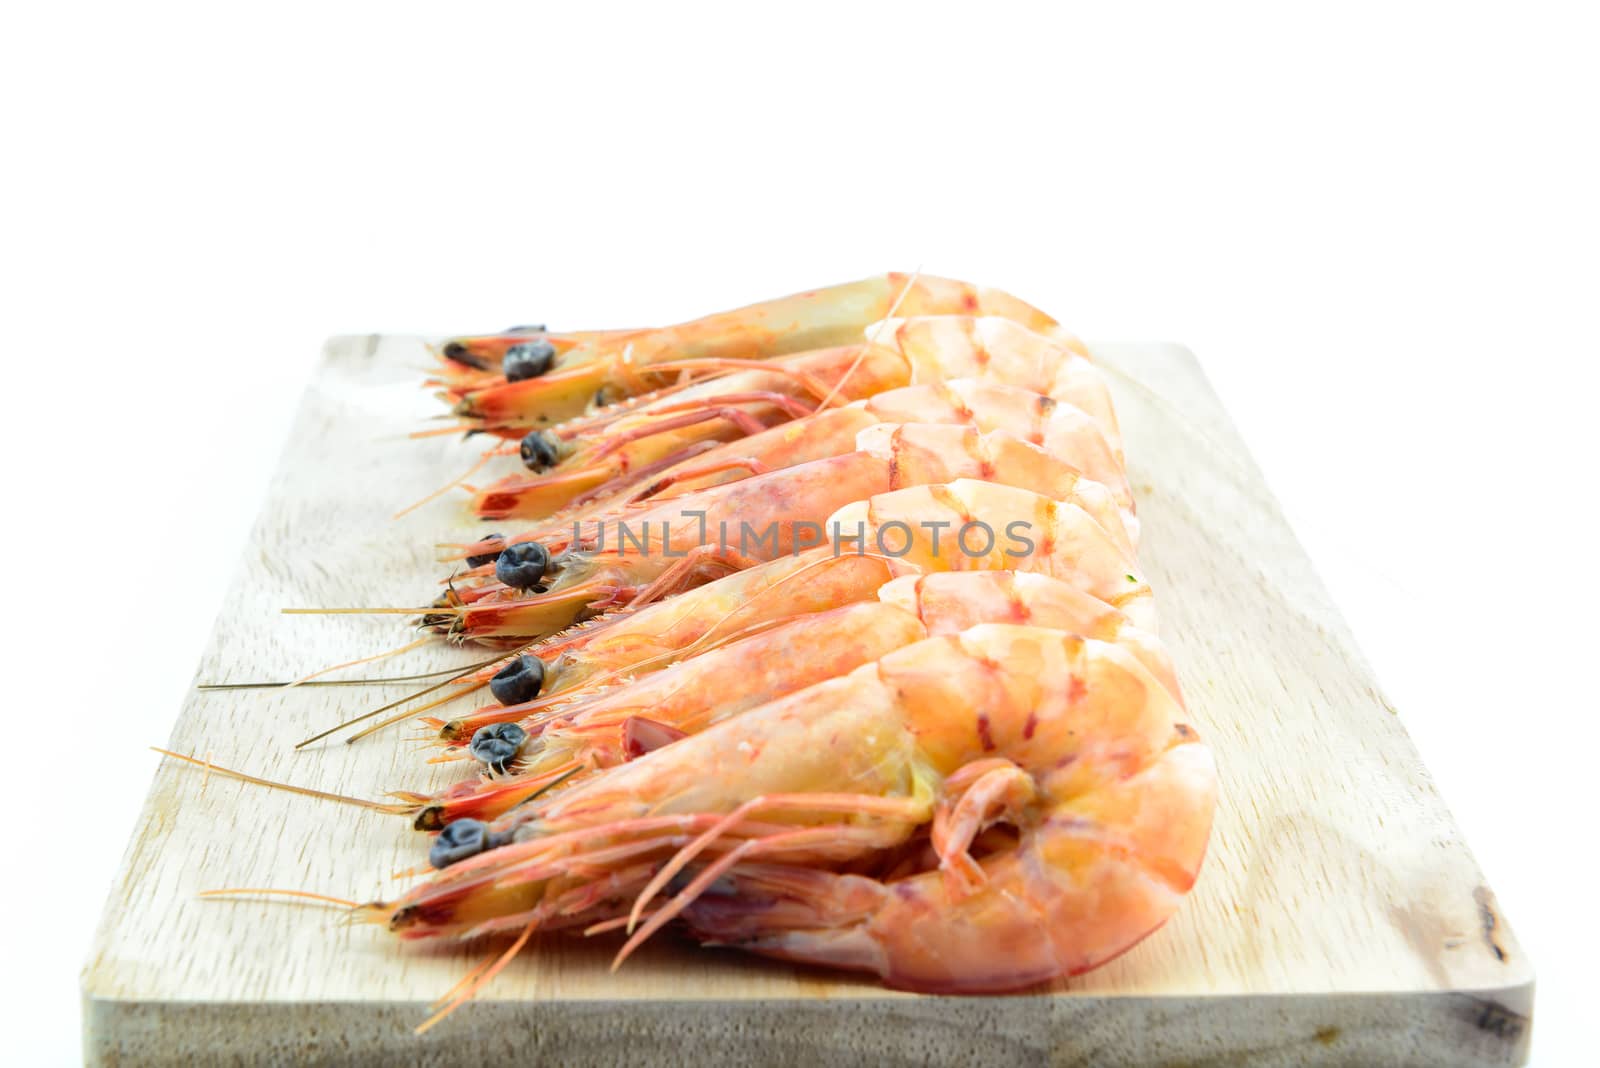 Boiled shrimp on wooden board on white background by YingTanthawarak